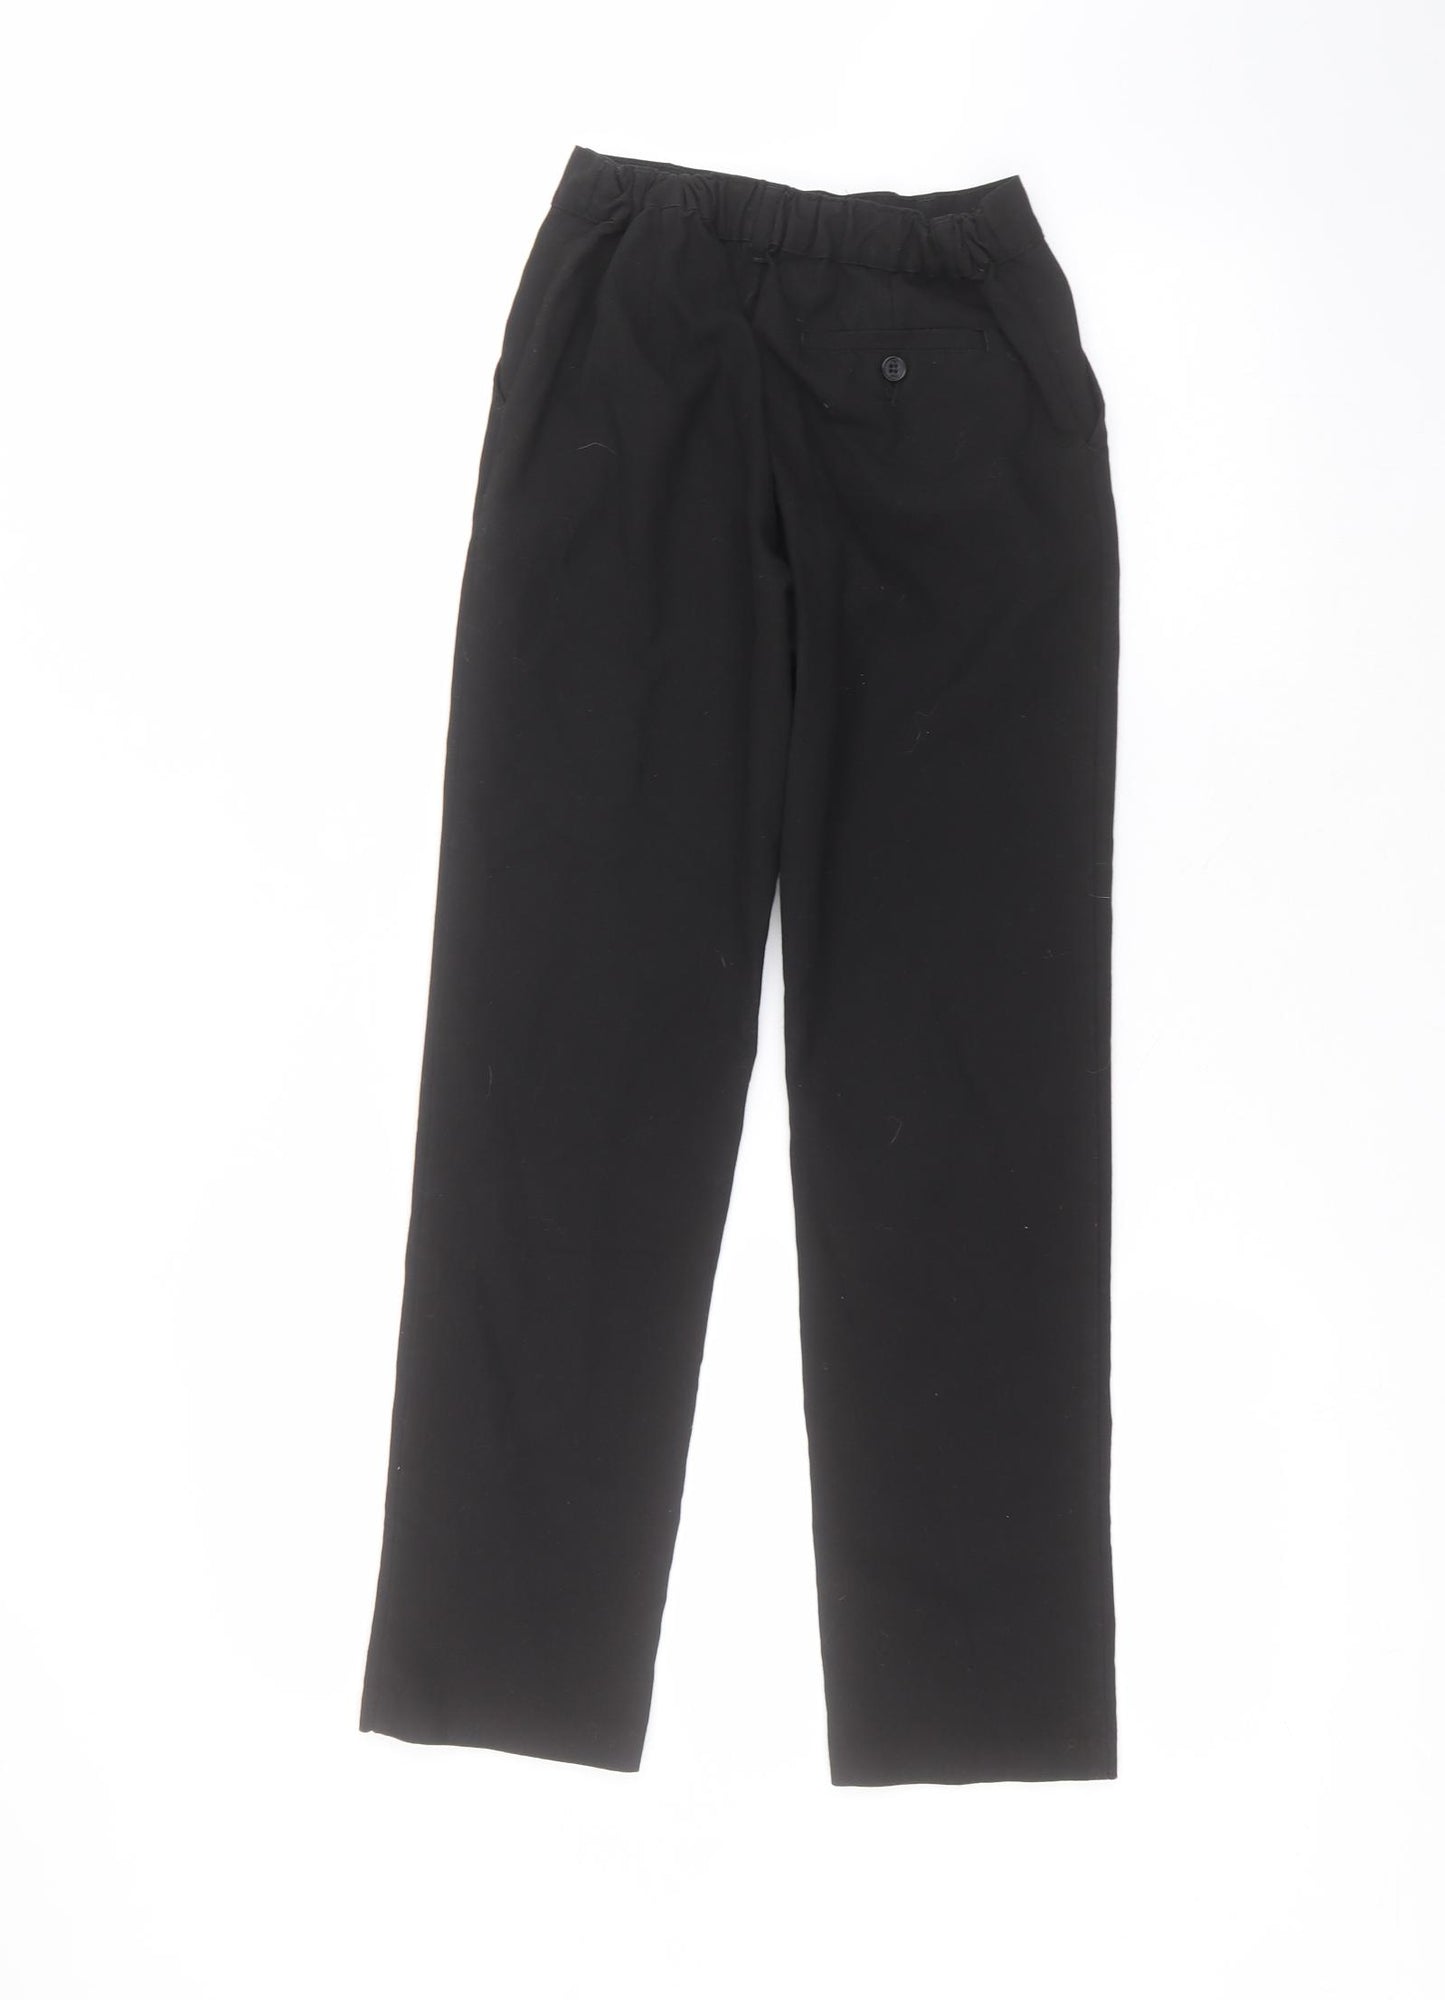 F&F Boys Black  Polyester Dress Pants Trousers Size 11-12 Years  Regular